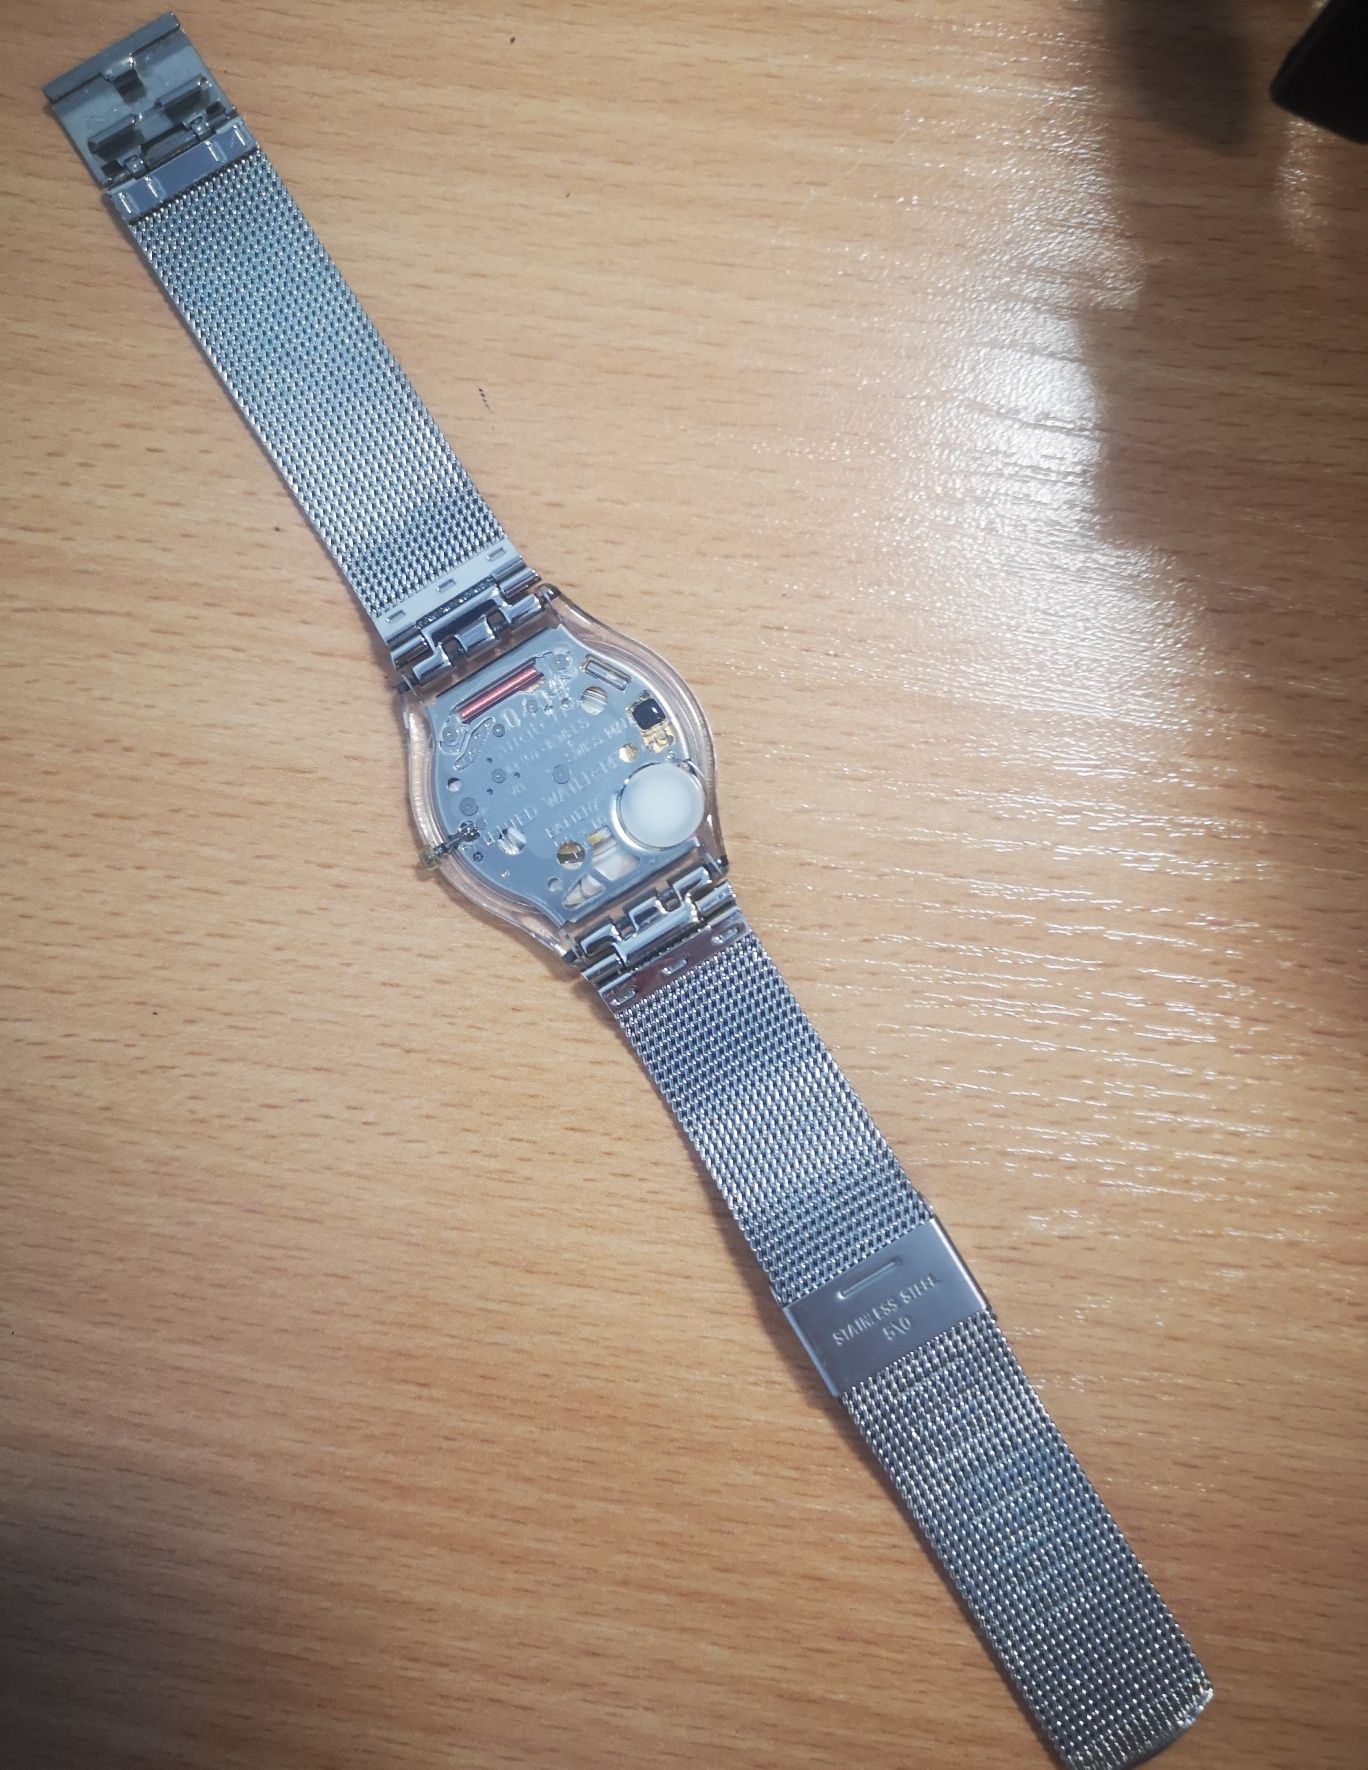 Zegarek swatch skin super cienki srebrny bransoletka mesh